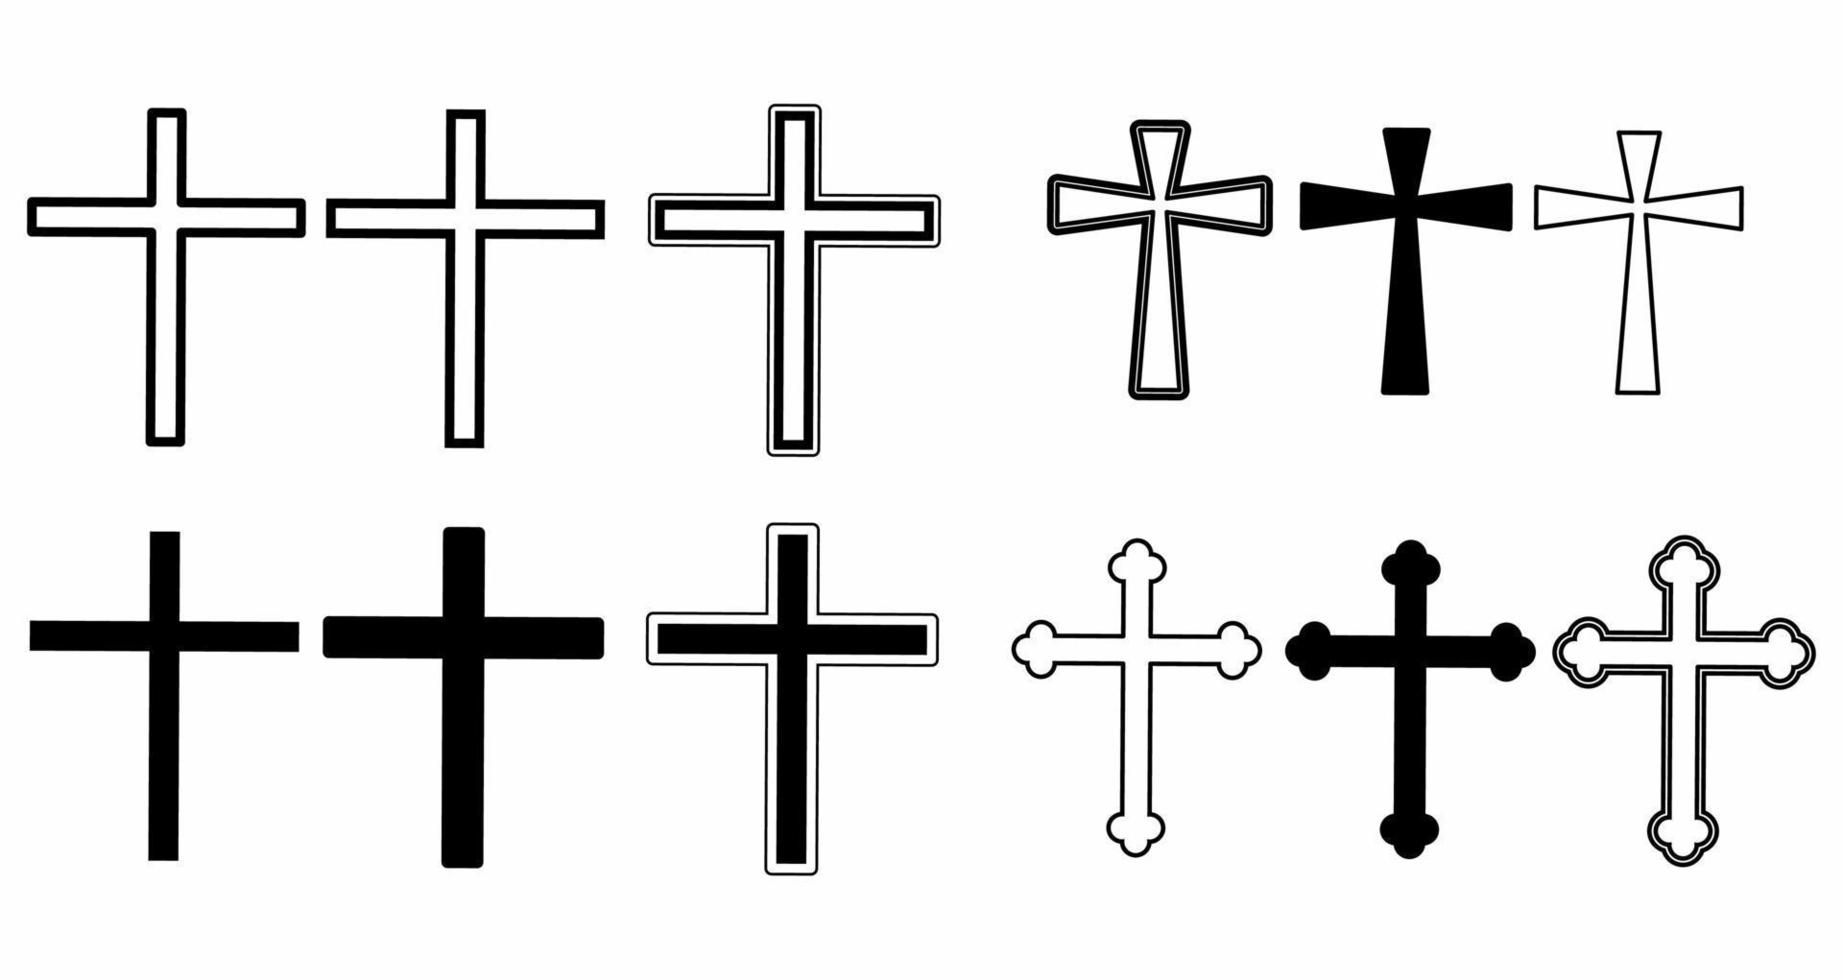 cruz cristiana conjunto aislado sobre fondo blanco vector